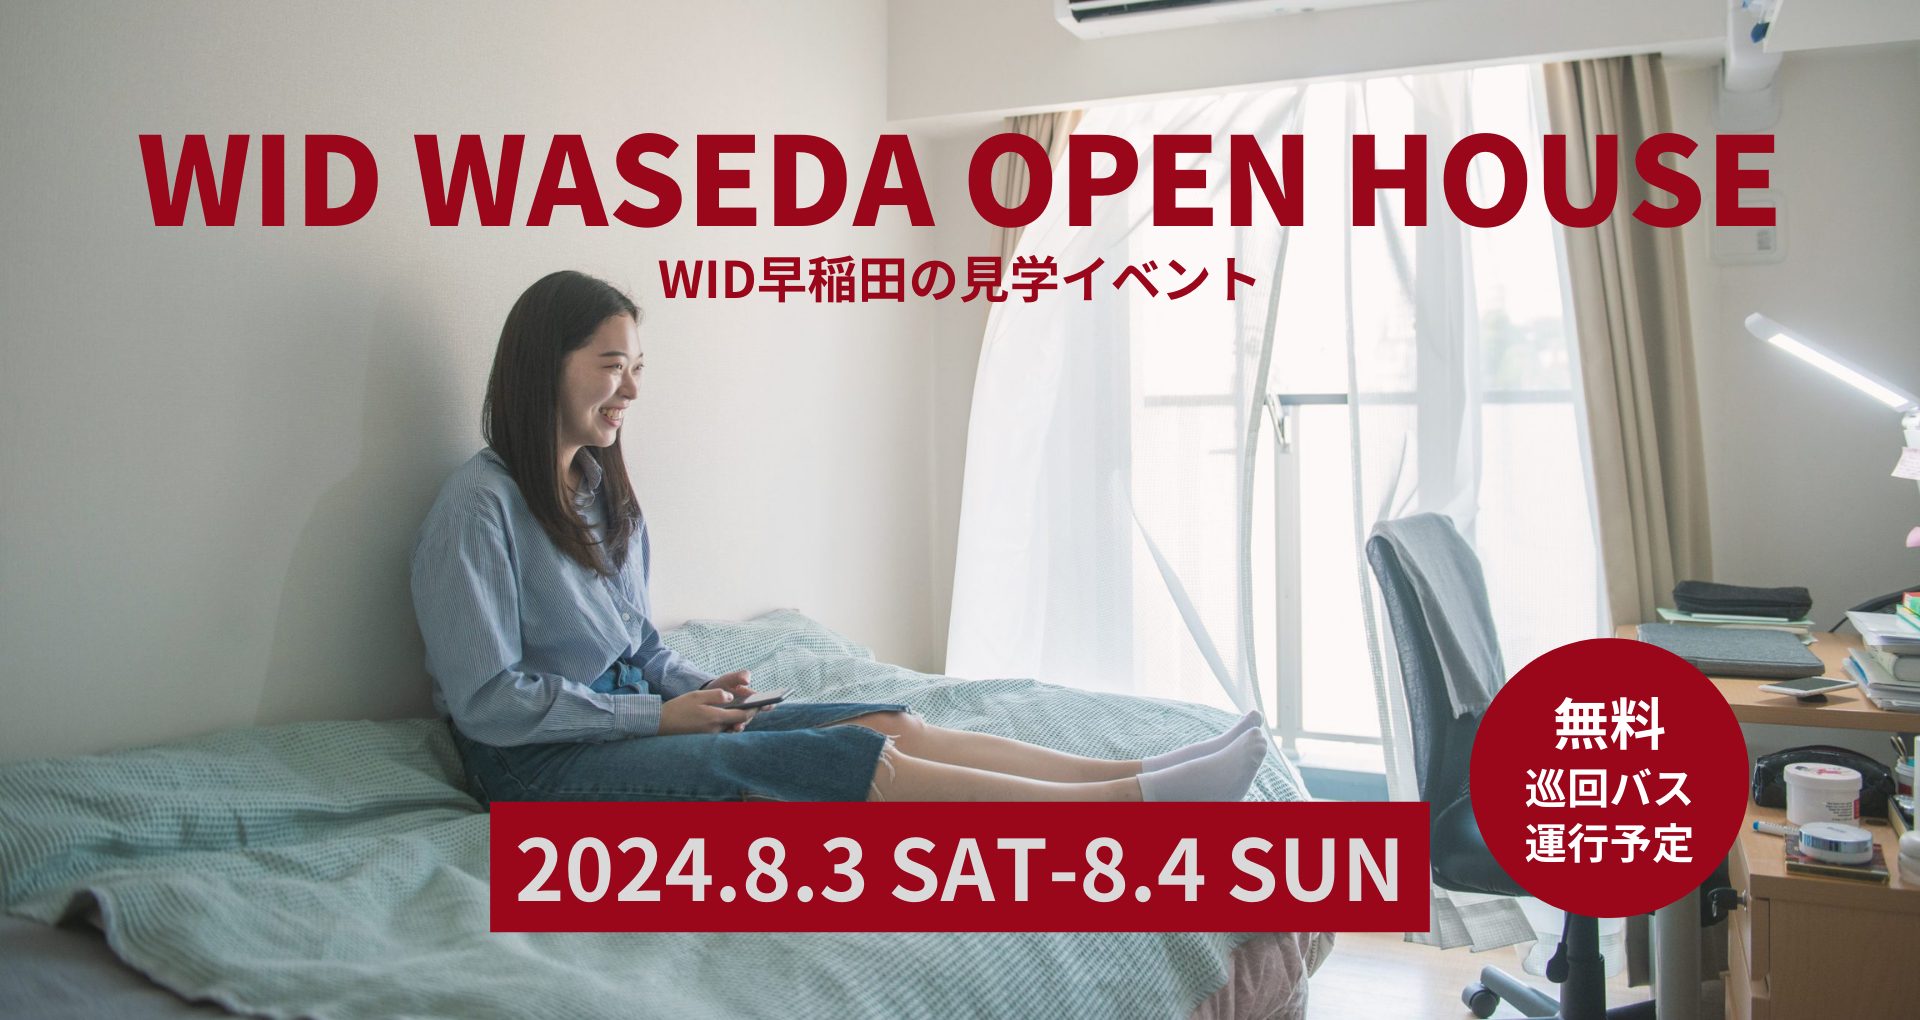 WID SPECIAL OPEN HOUSE 2024をWID早稲田で開催します。現地でお待ちしております！